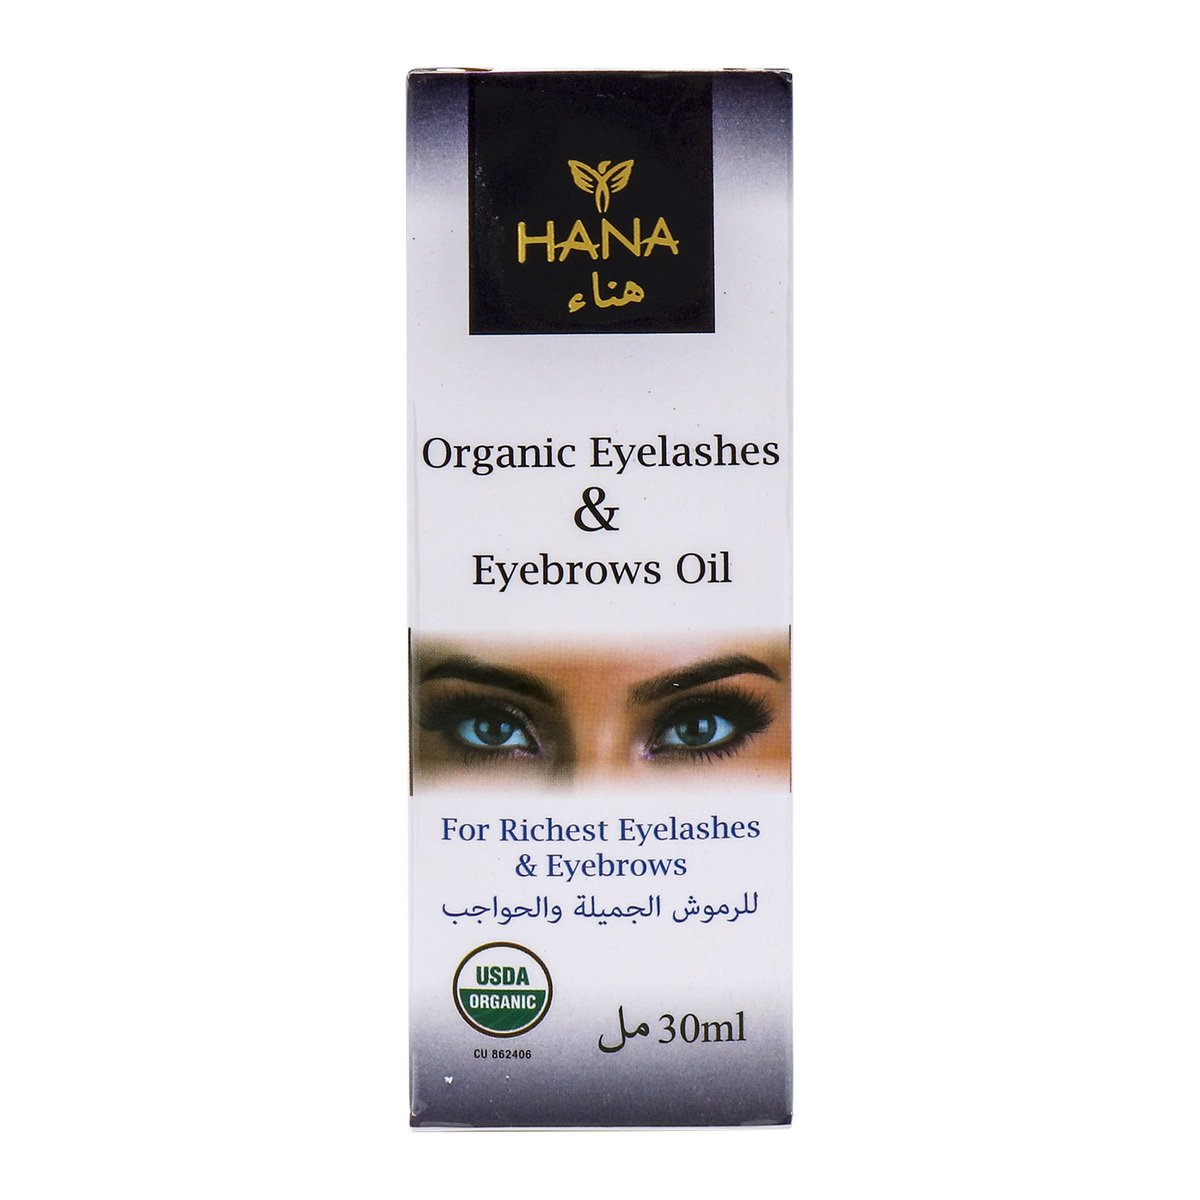 Hana Organic Eyelashes & Eyebrows Oil 30ml